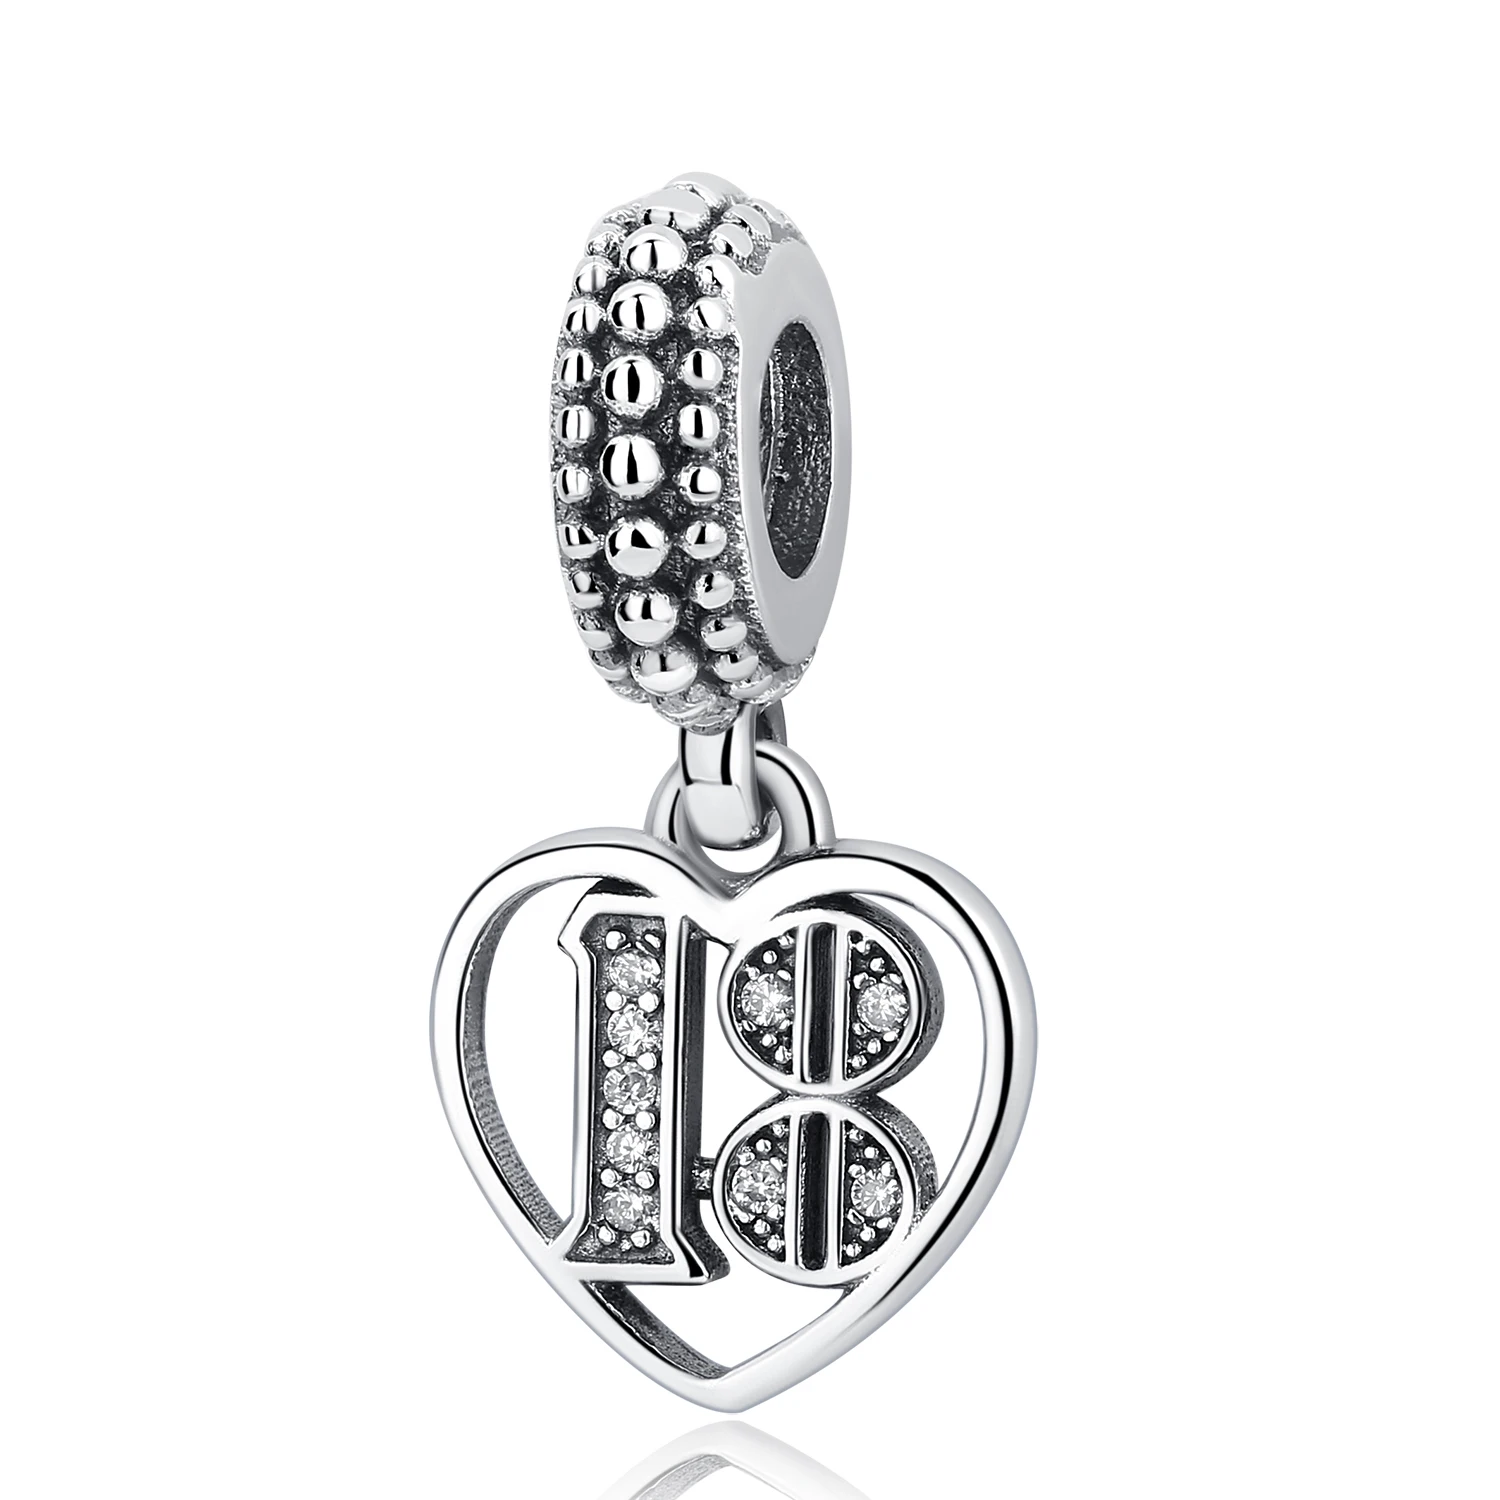 

Diy Jewelry Making Women Pulsera Fit Pandora Charms Beads Sterling Silver 925 Original Regalos Bisuteria Kralen Voor Sieraden